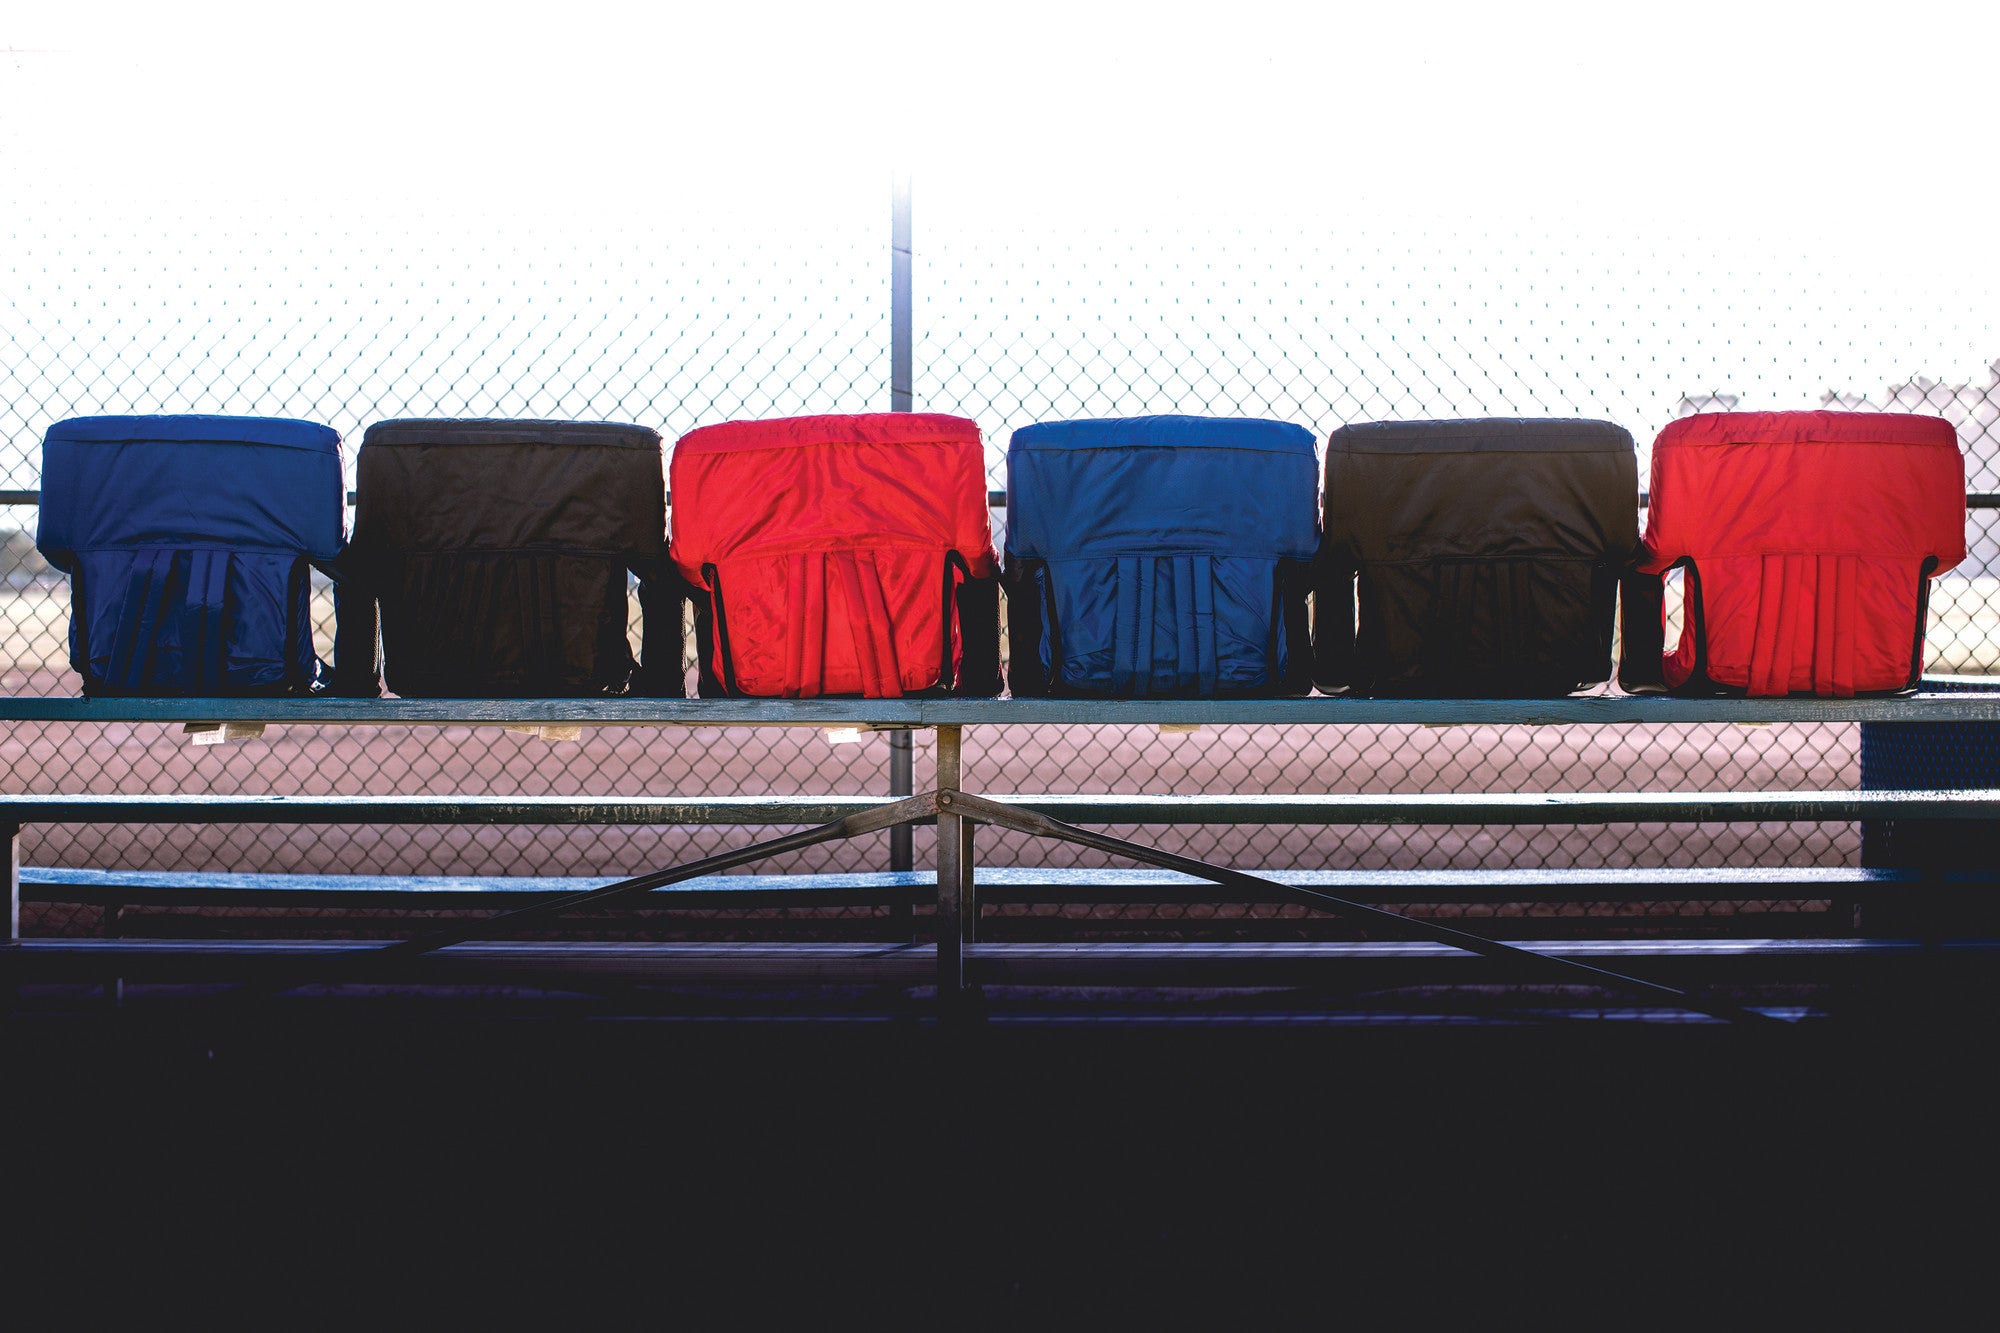 South Carolina Gamecocks - Ventura Portable Reclining Stadium Seat